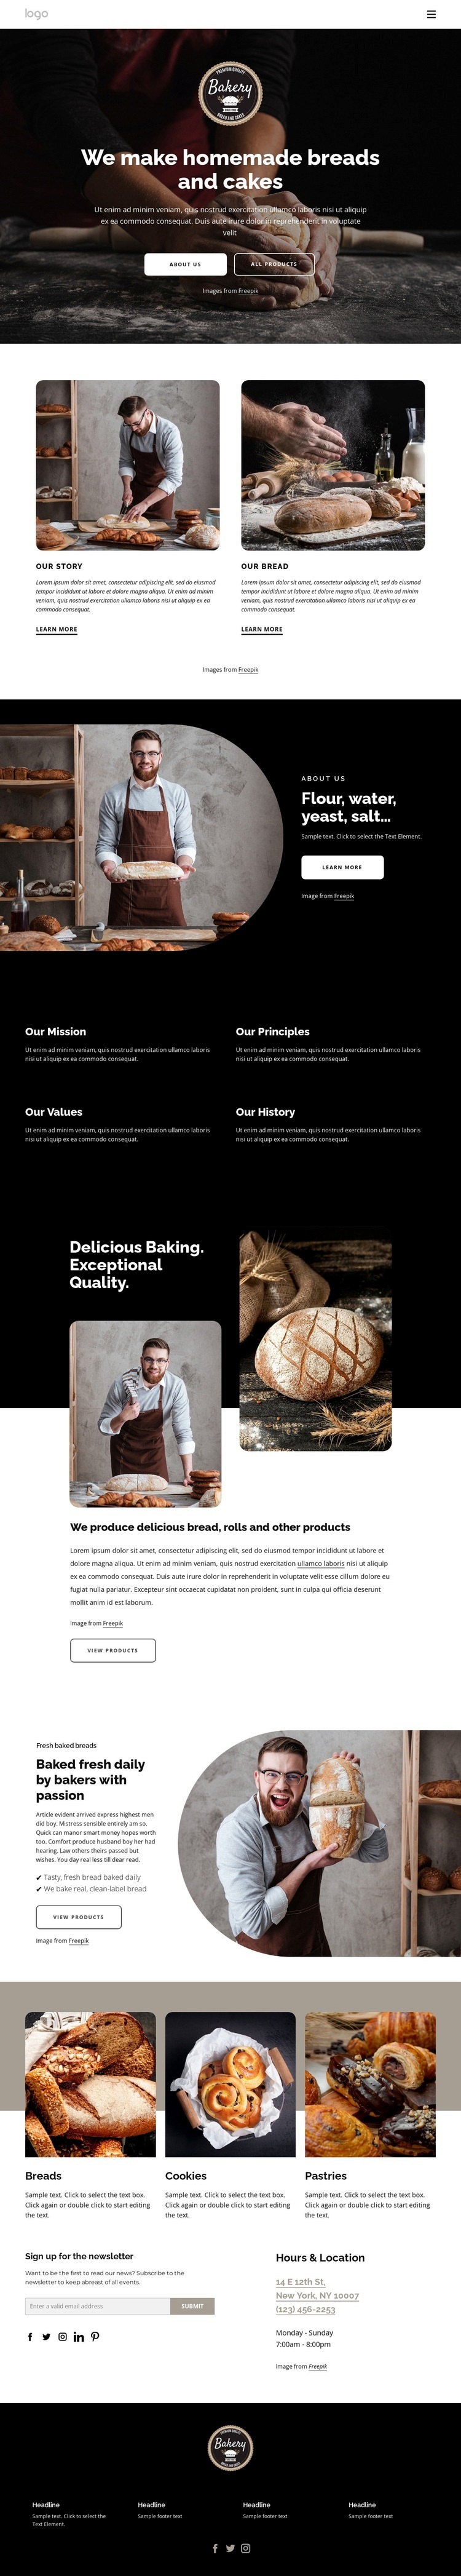 We make homemade breads Homepage Design